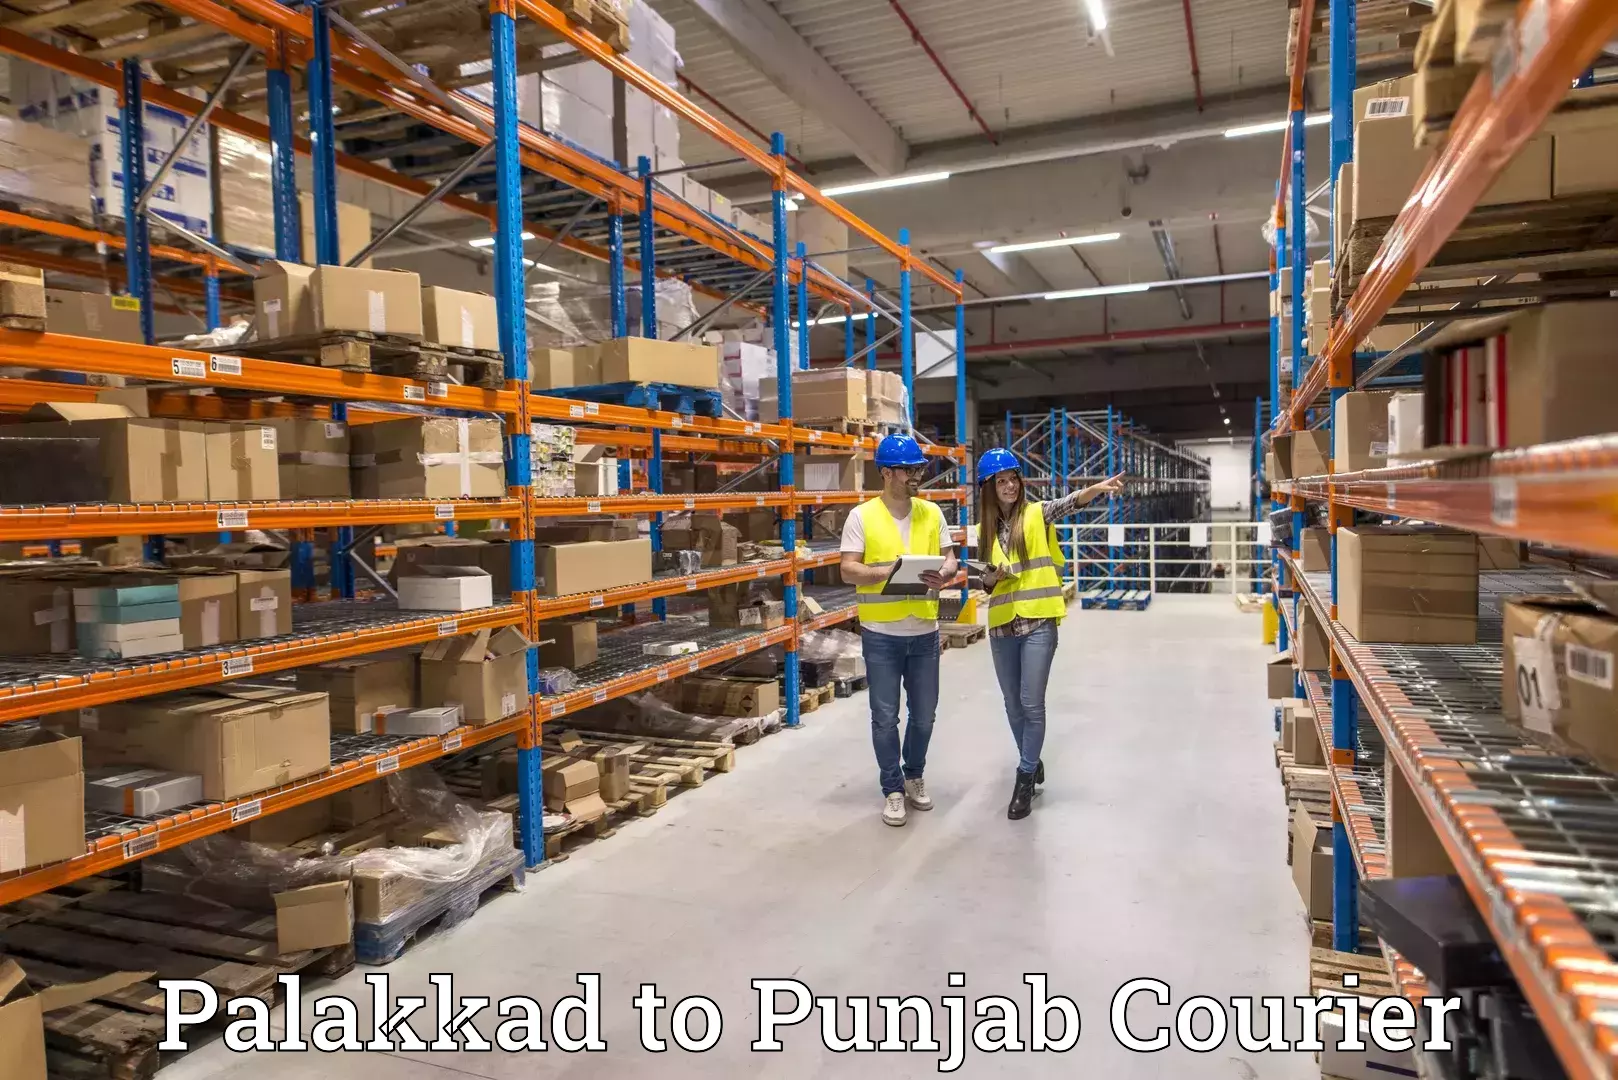 Courier service comparison Palakkad to Patti Tarn Tara